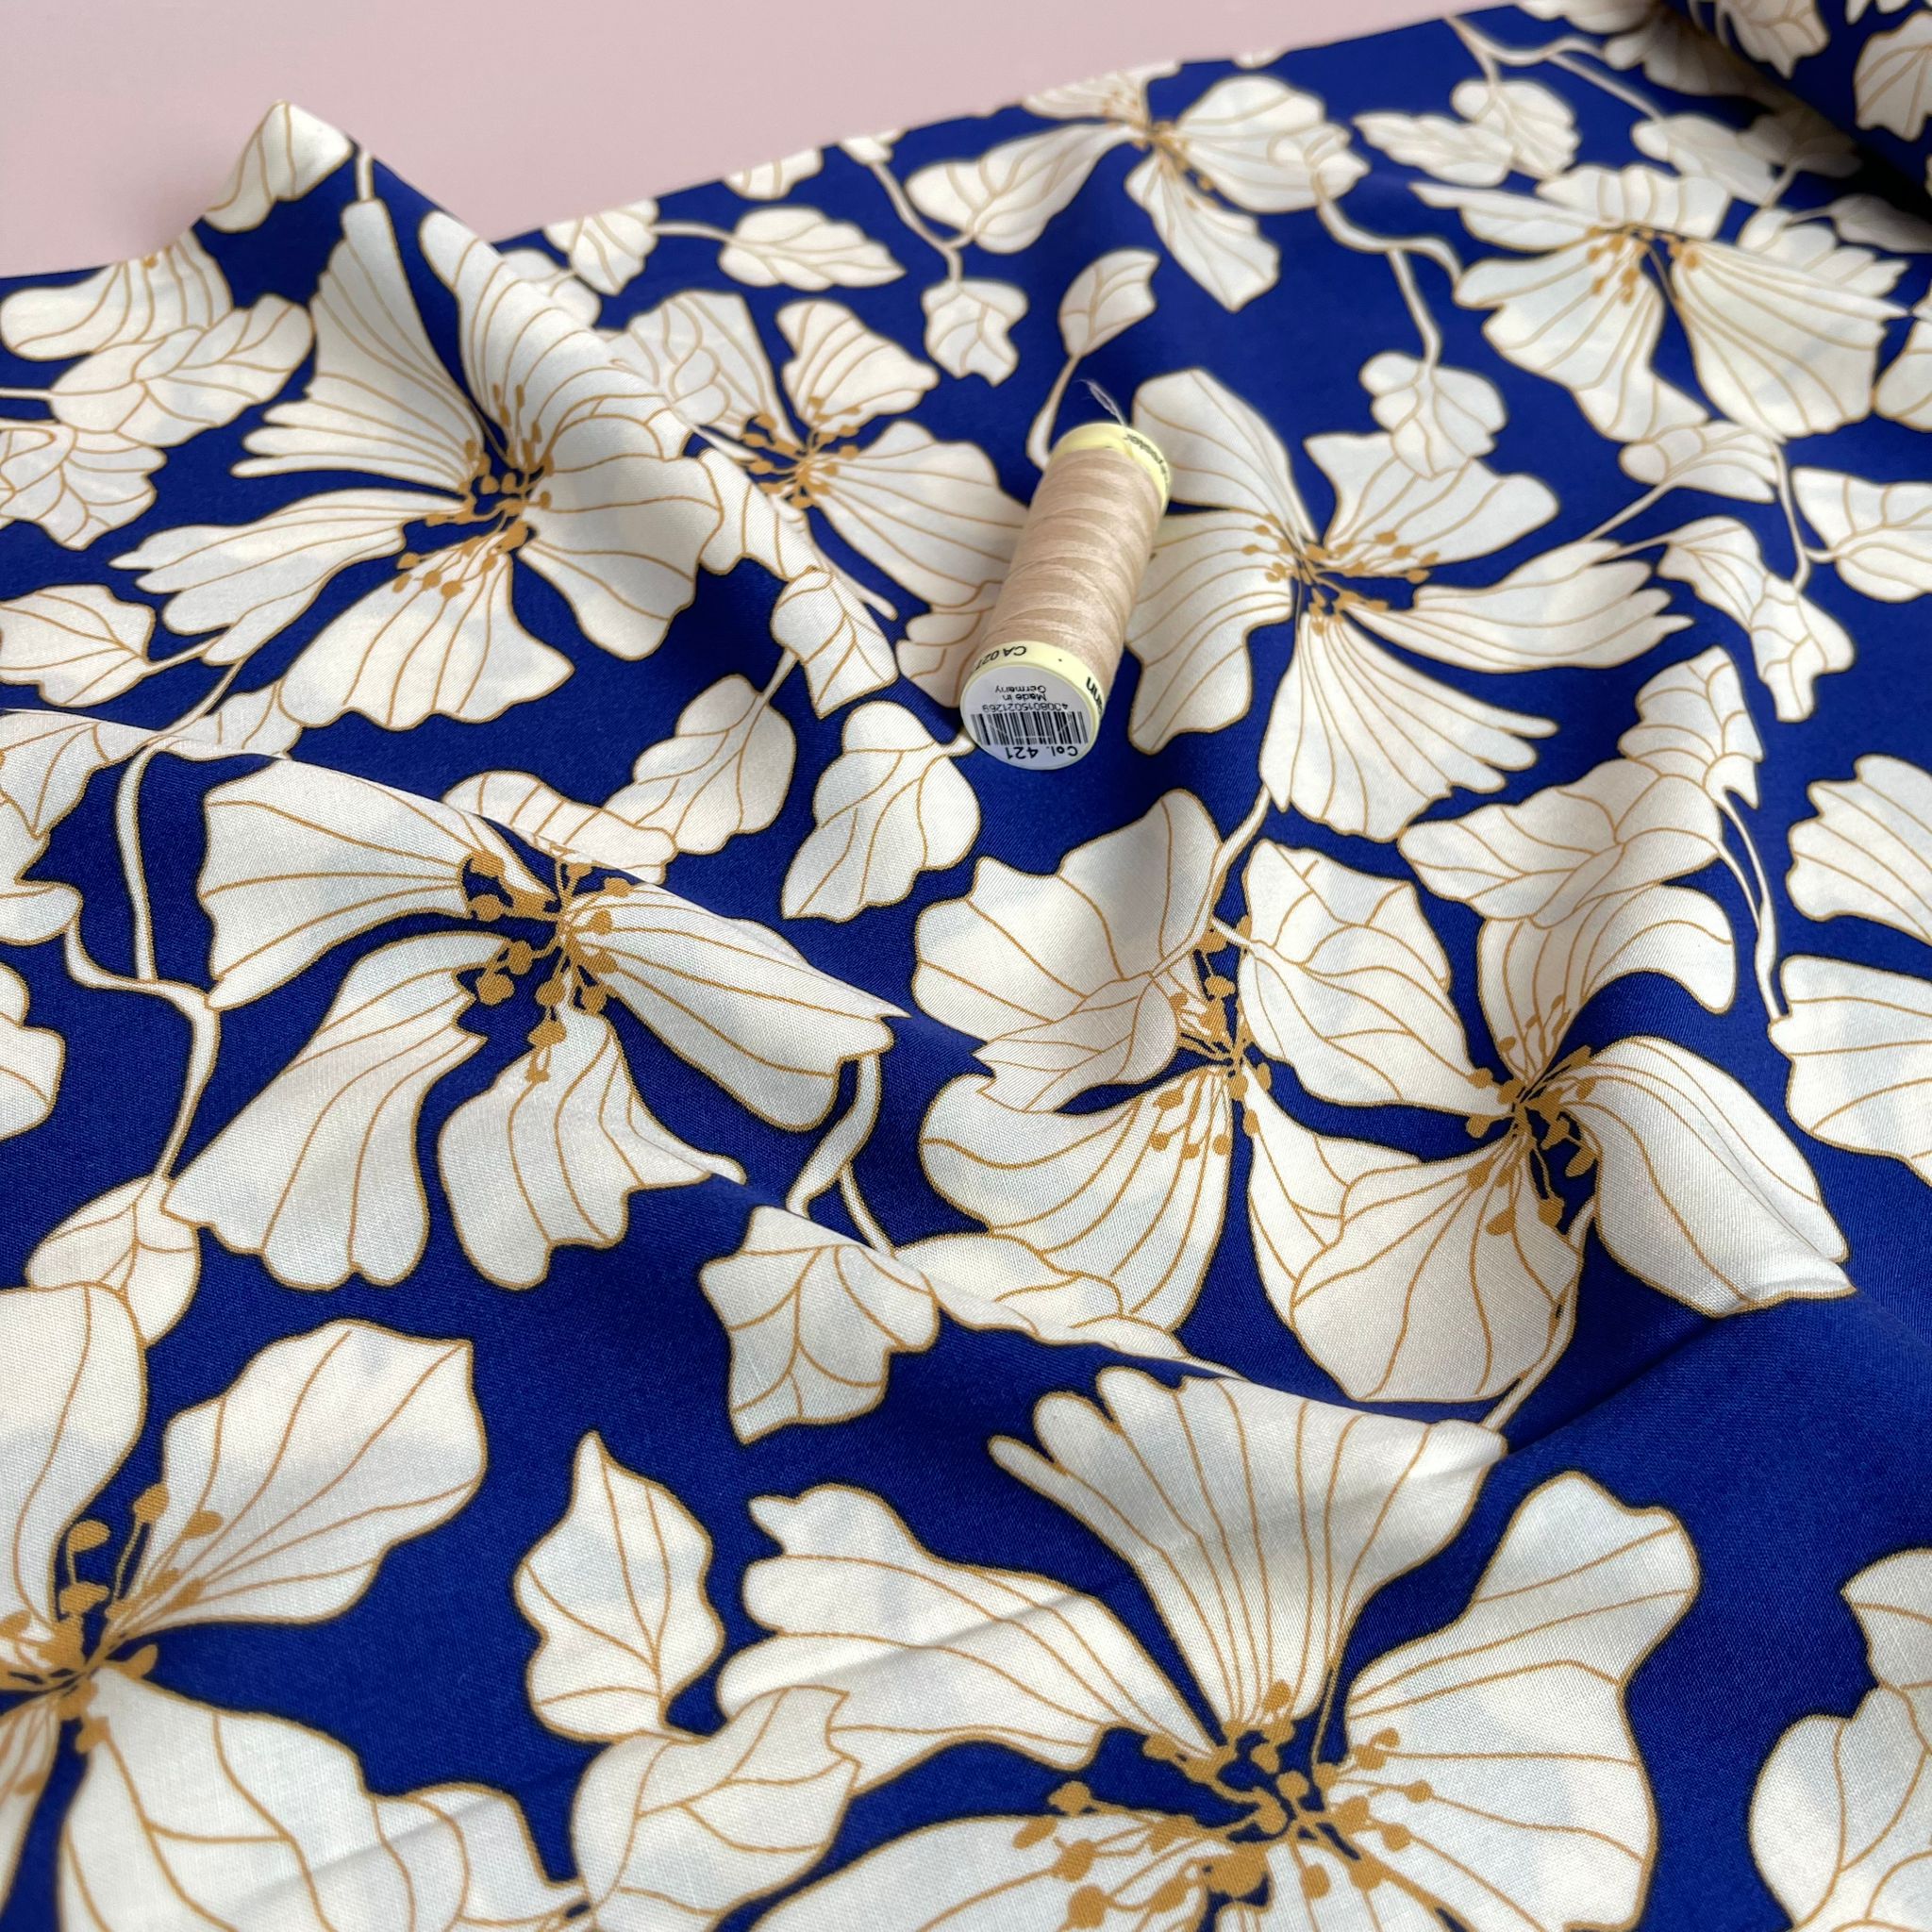 REMNANT 0.6 Metre - Golden Blooms on Cobalt Blue Viscose Fabric